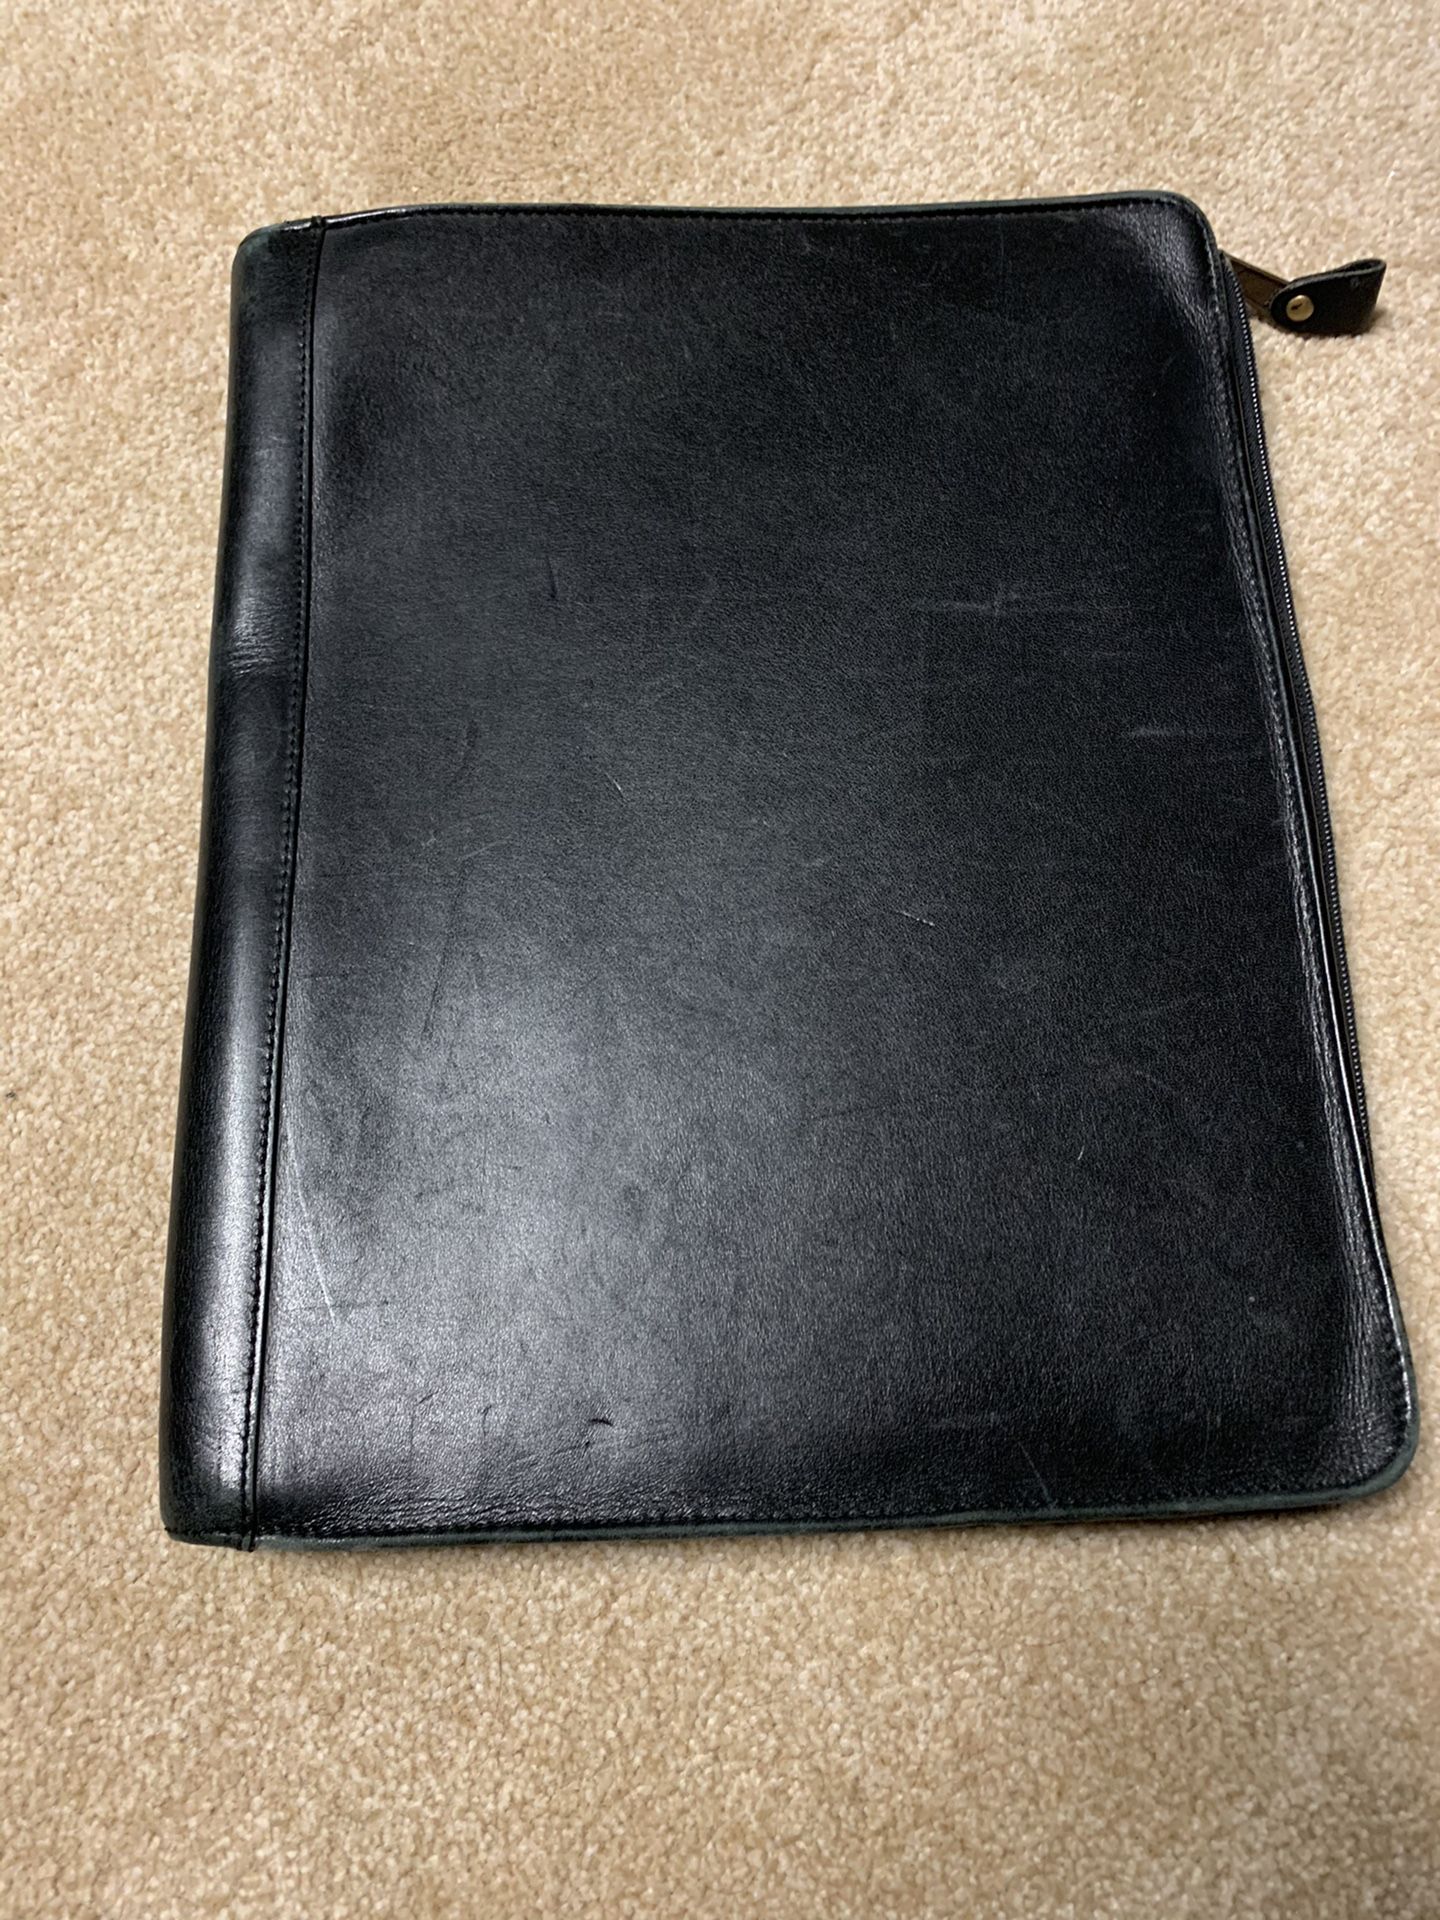 Leather work folder